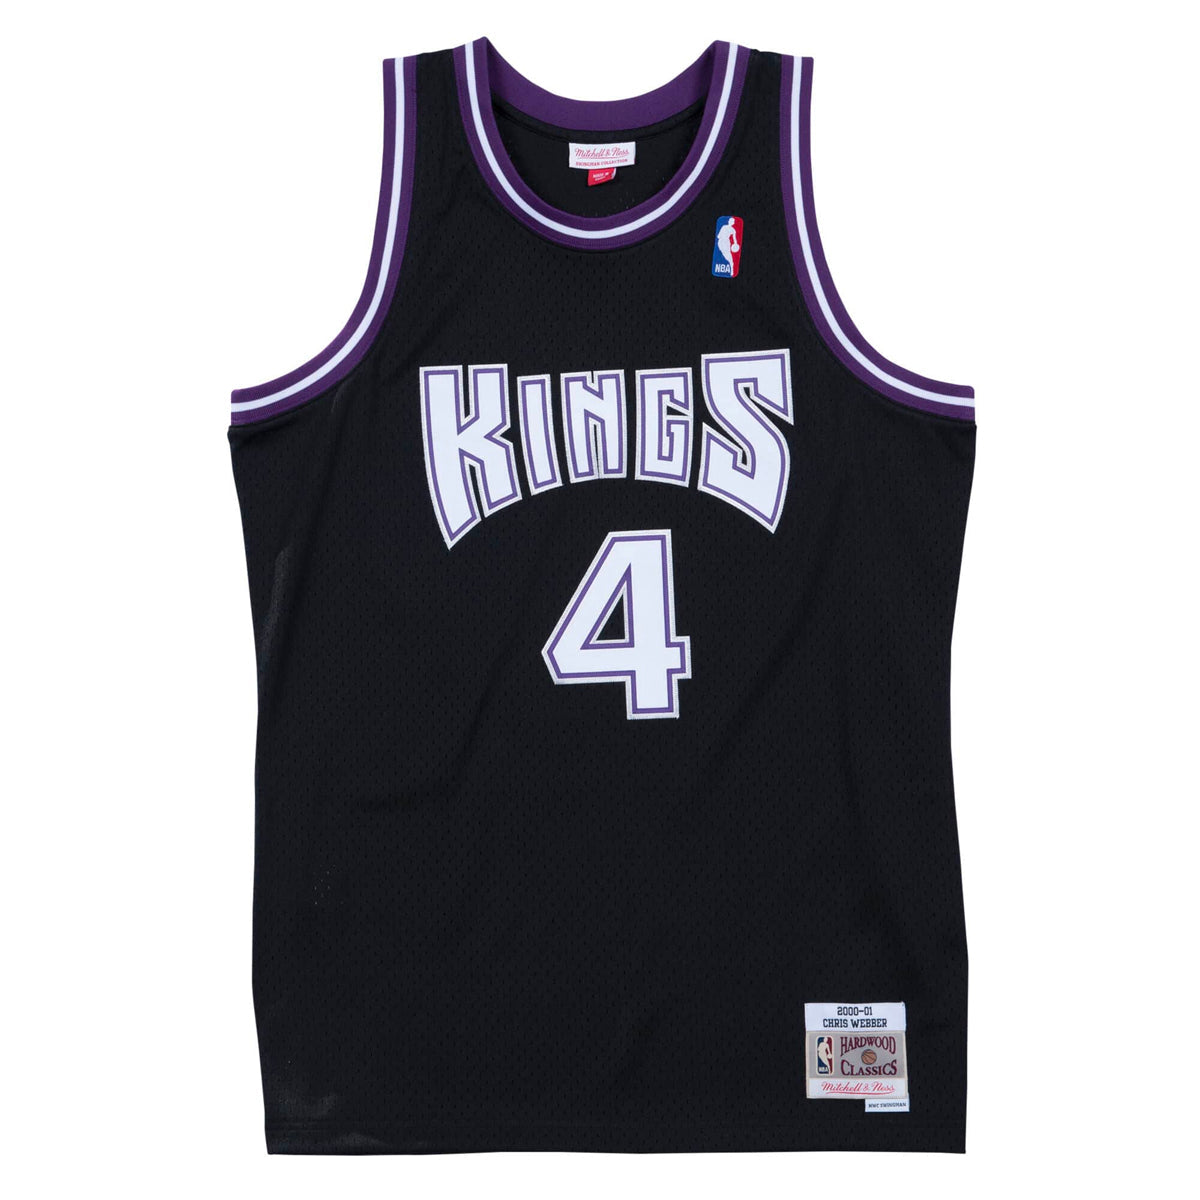 Authentic Vintage Reebok Sacramento Kings Chris Webber Jersey Size